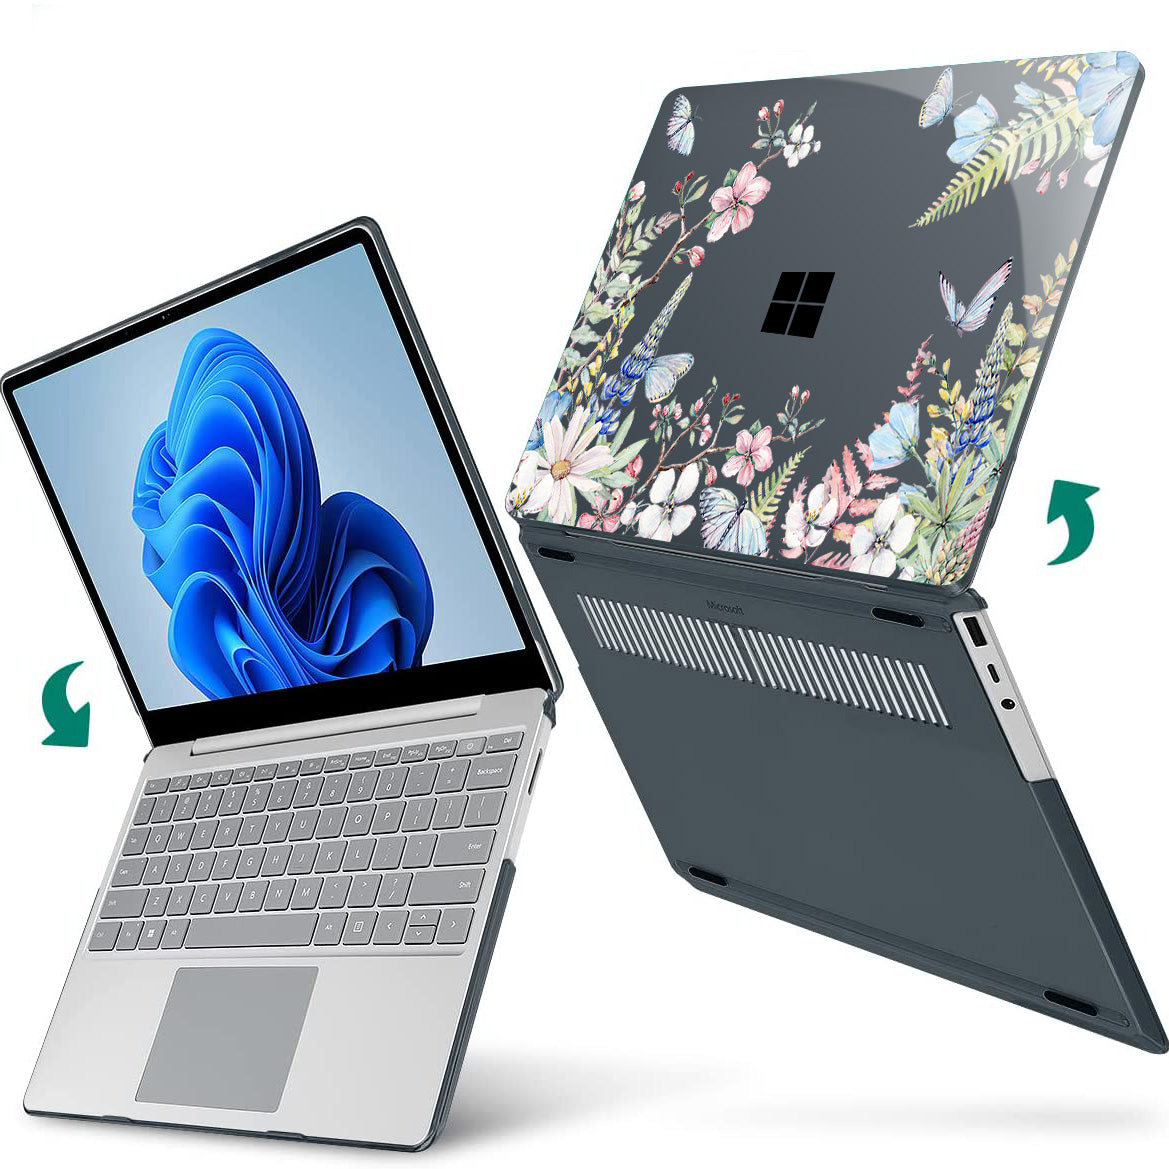 Kaleidoscope Butterfly Microsoft Surface Laptop Case